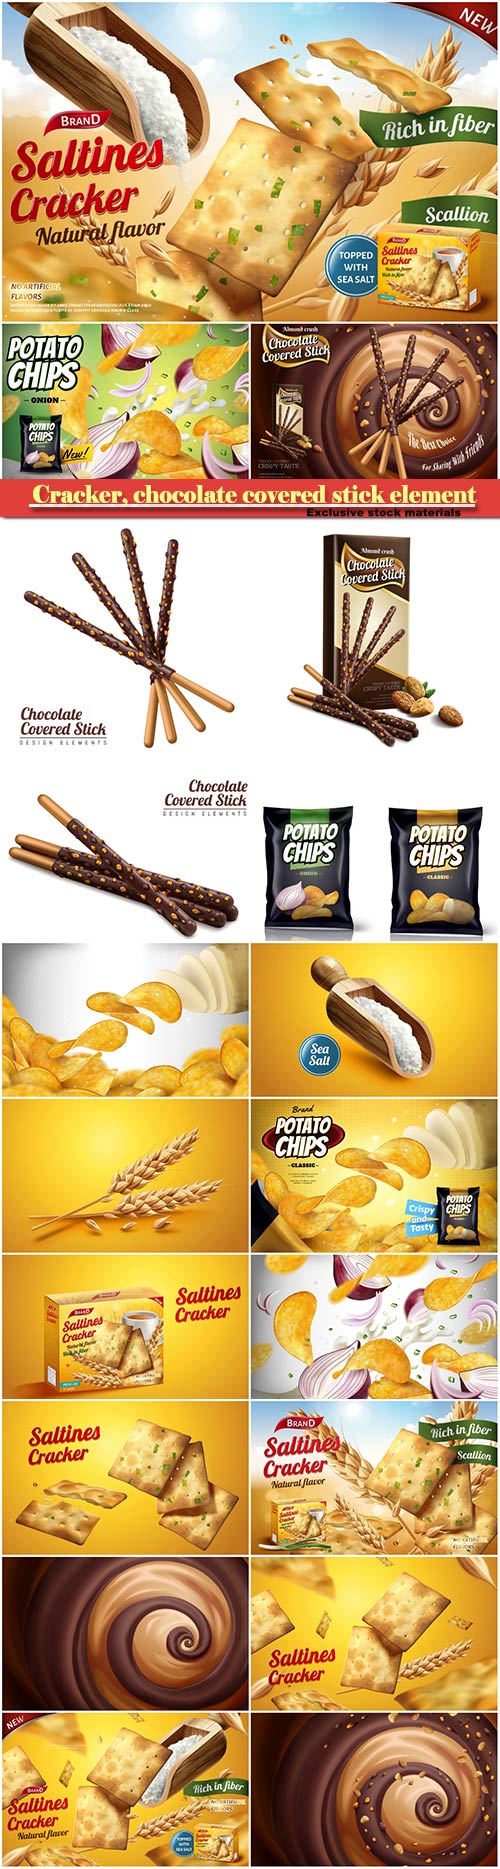 Saltines cracker ads, chocolate covered stick element, potato chip ads